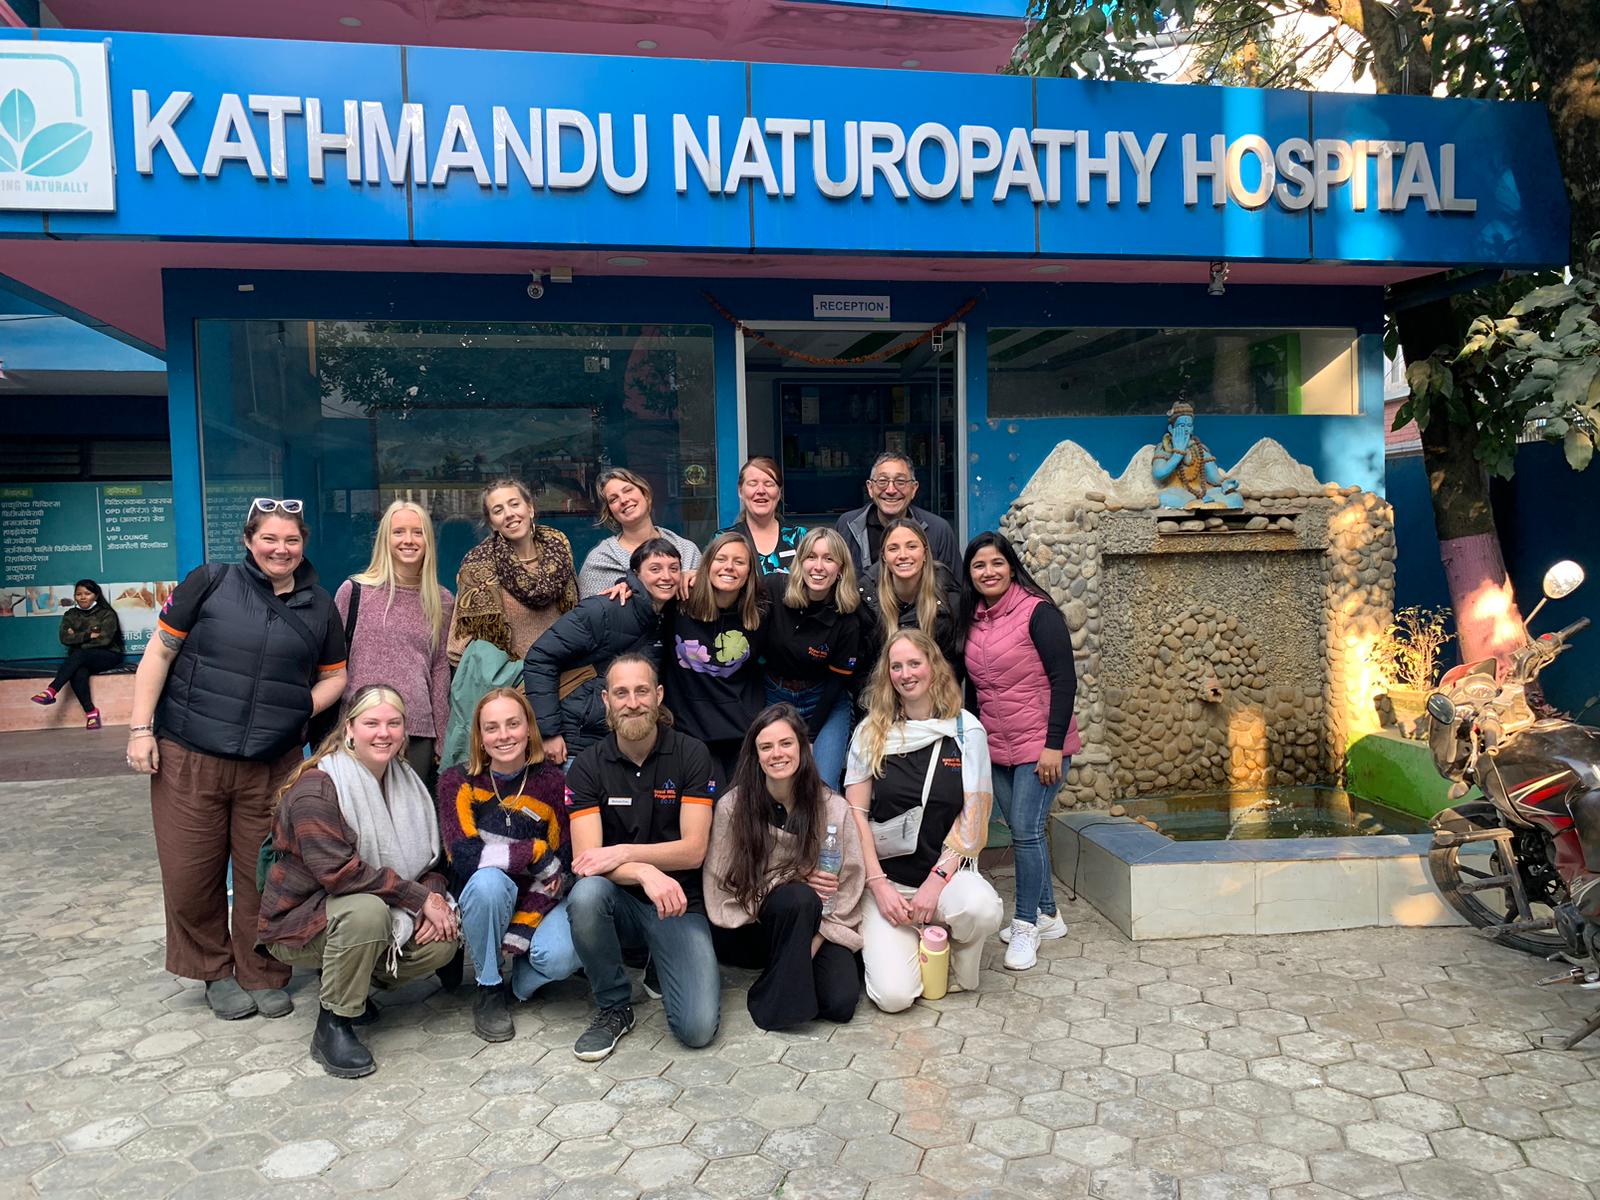 Kathmandu Naturopathy Hospital